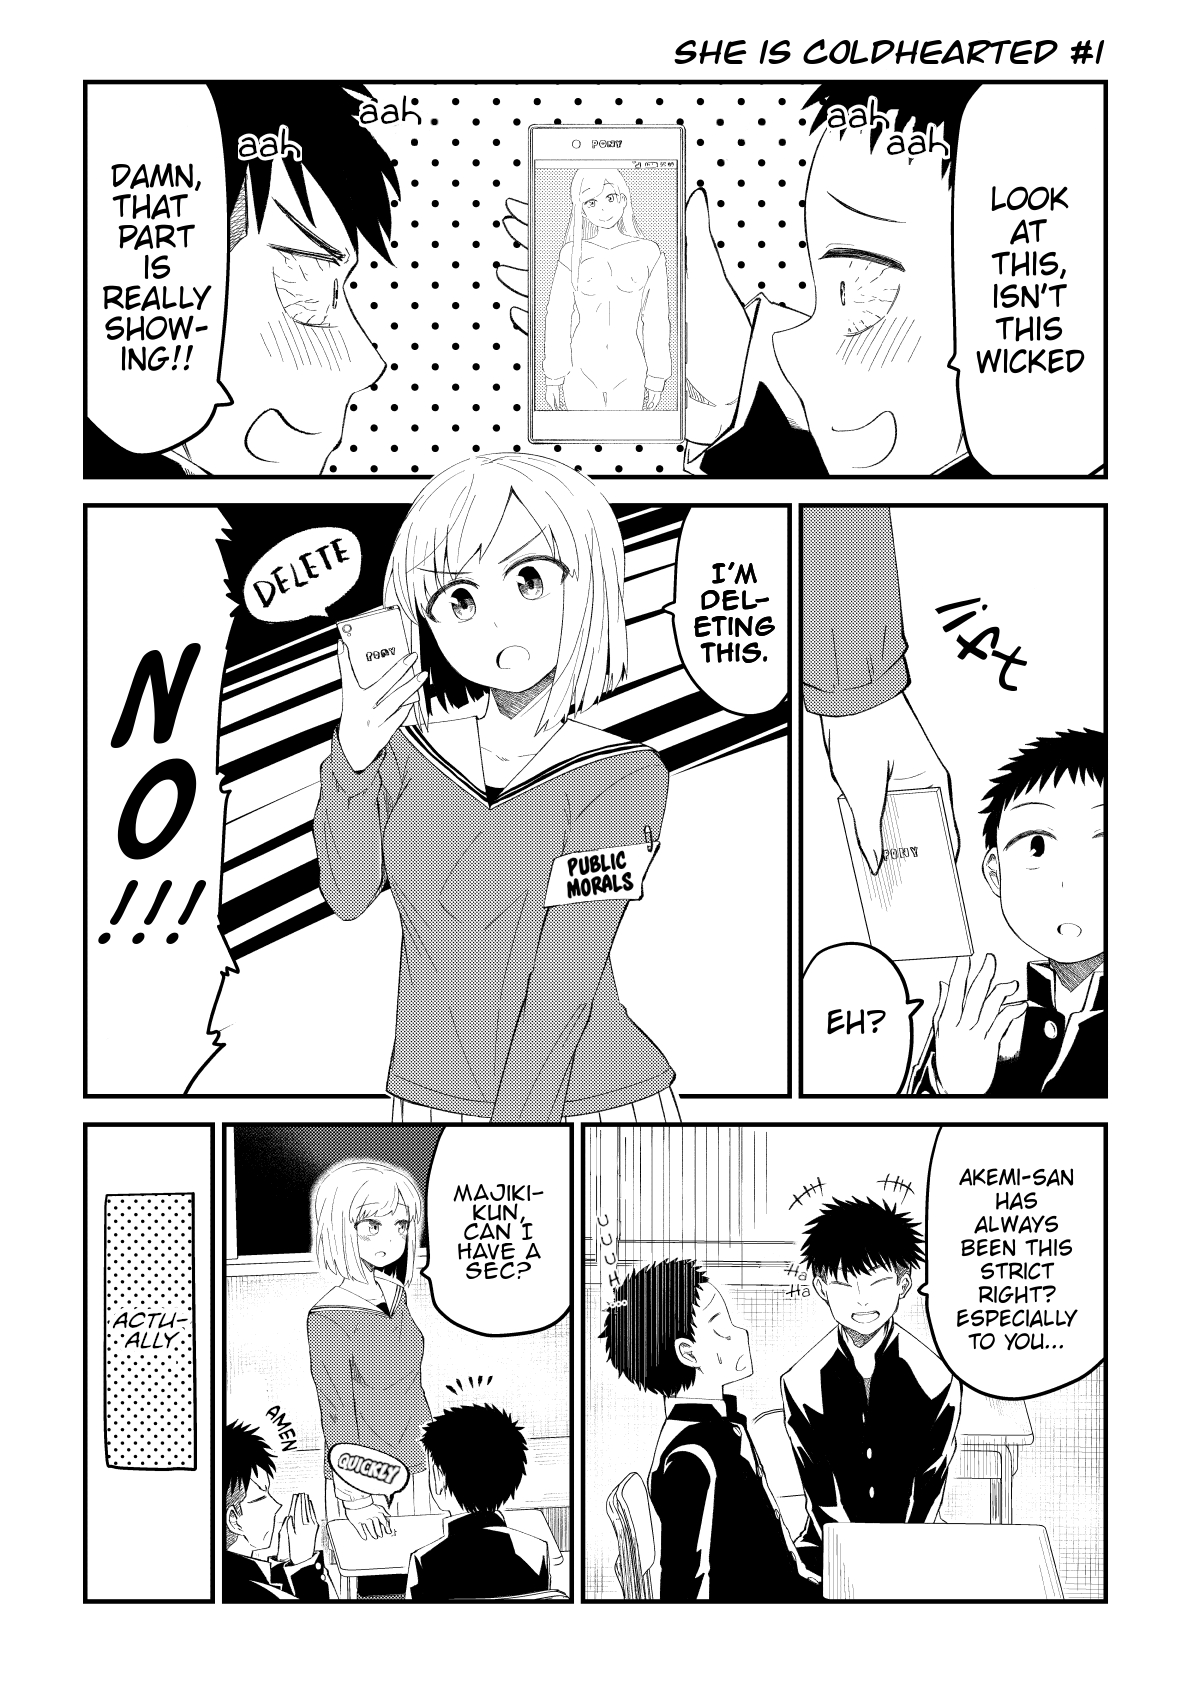 A Coldhearted Girlfriend manga